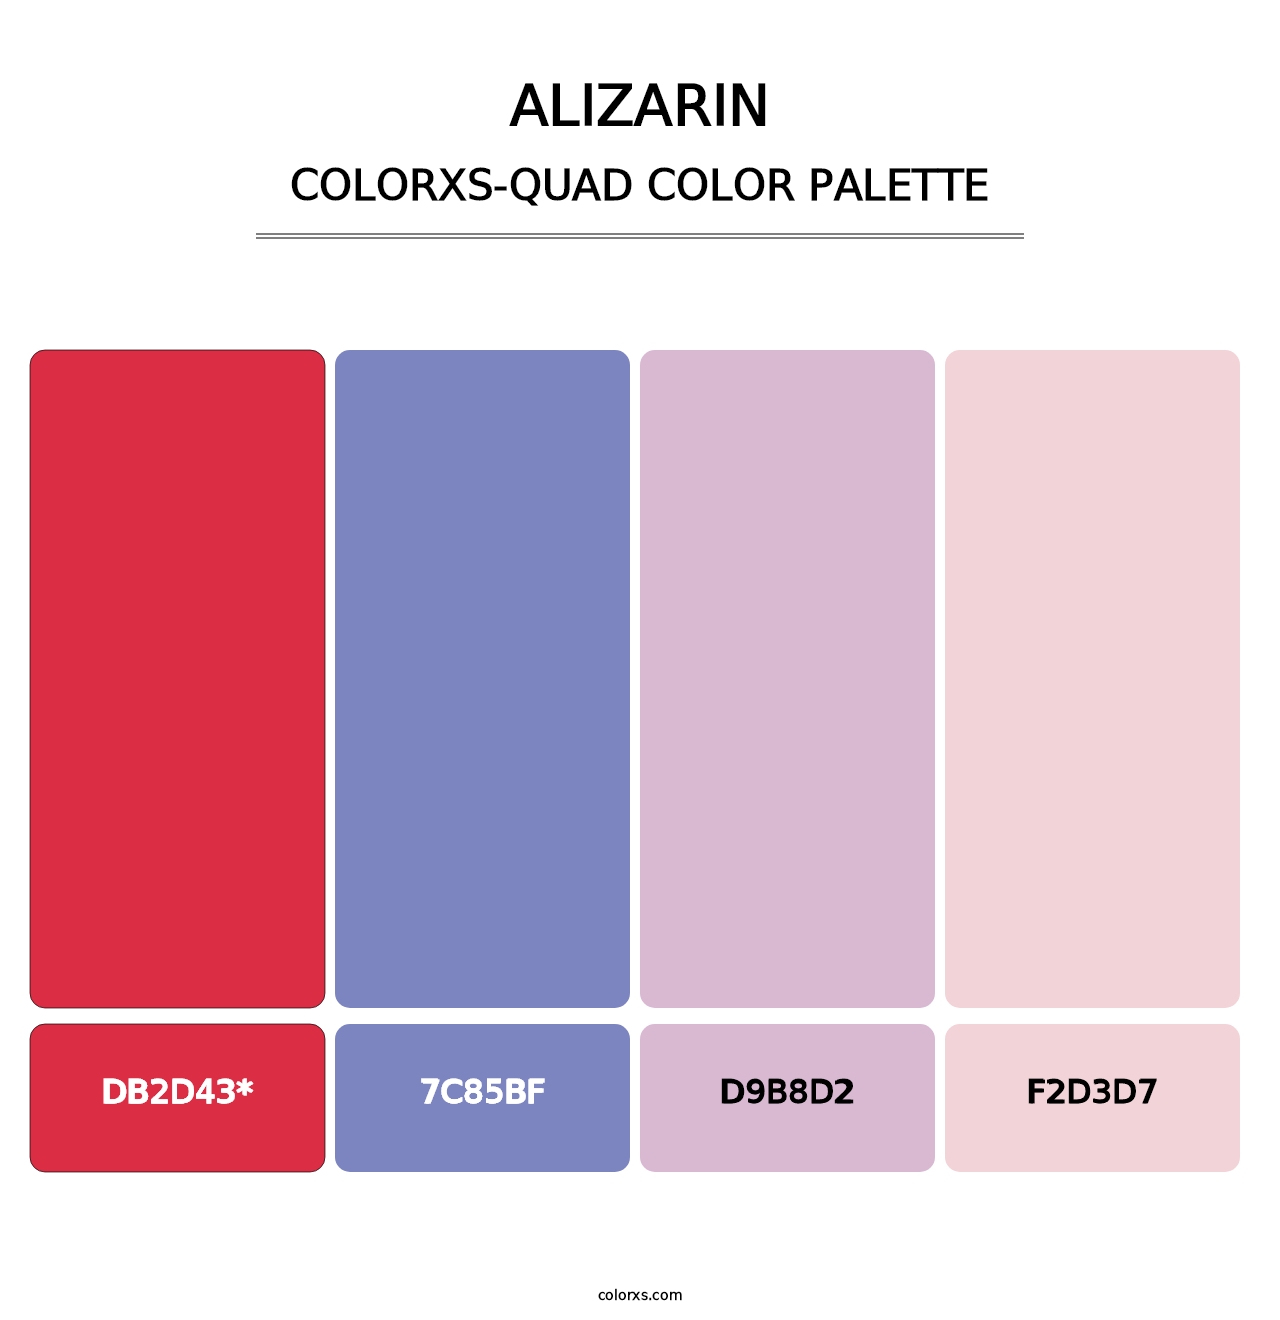 Alizarin - Colorxs Quad Palette